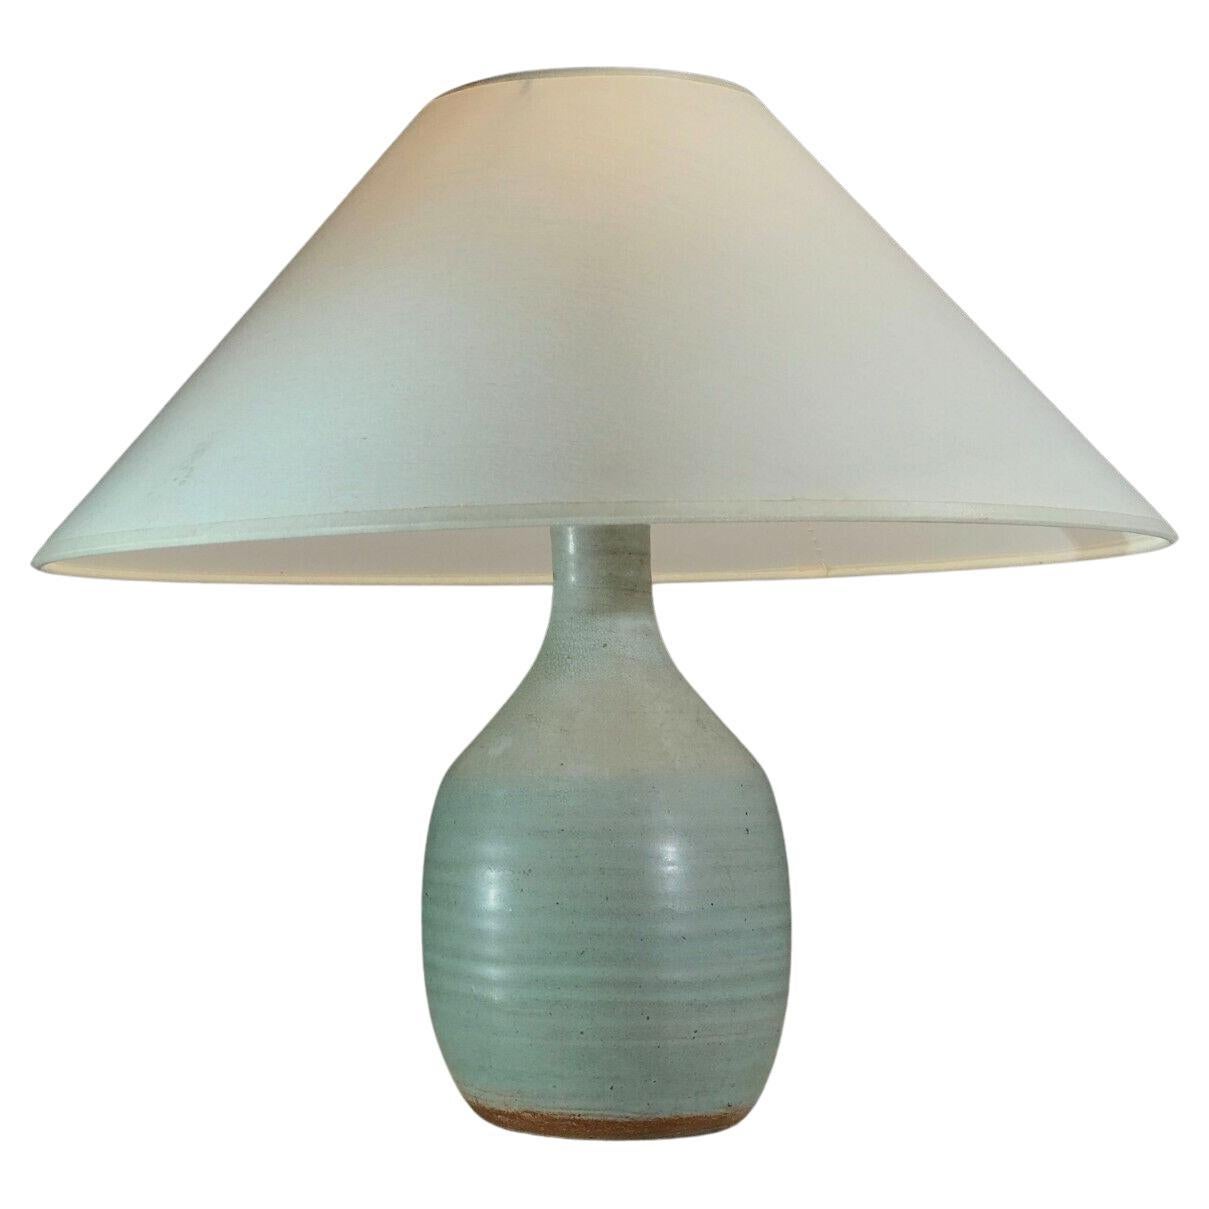 A MID-CENTURY-MODERN NEOCLASSIC Ceramic TABLE LAMP par DRILLON, France 1950